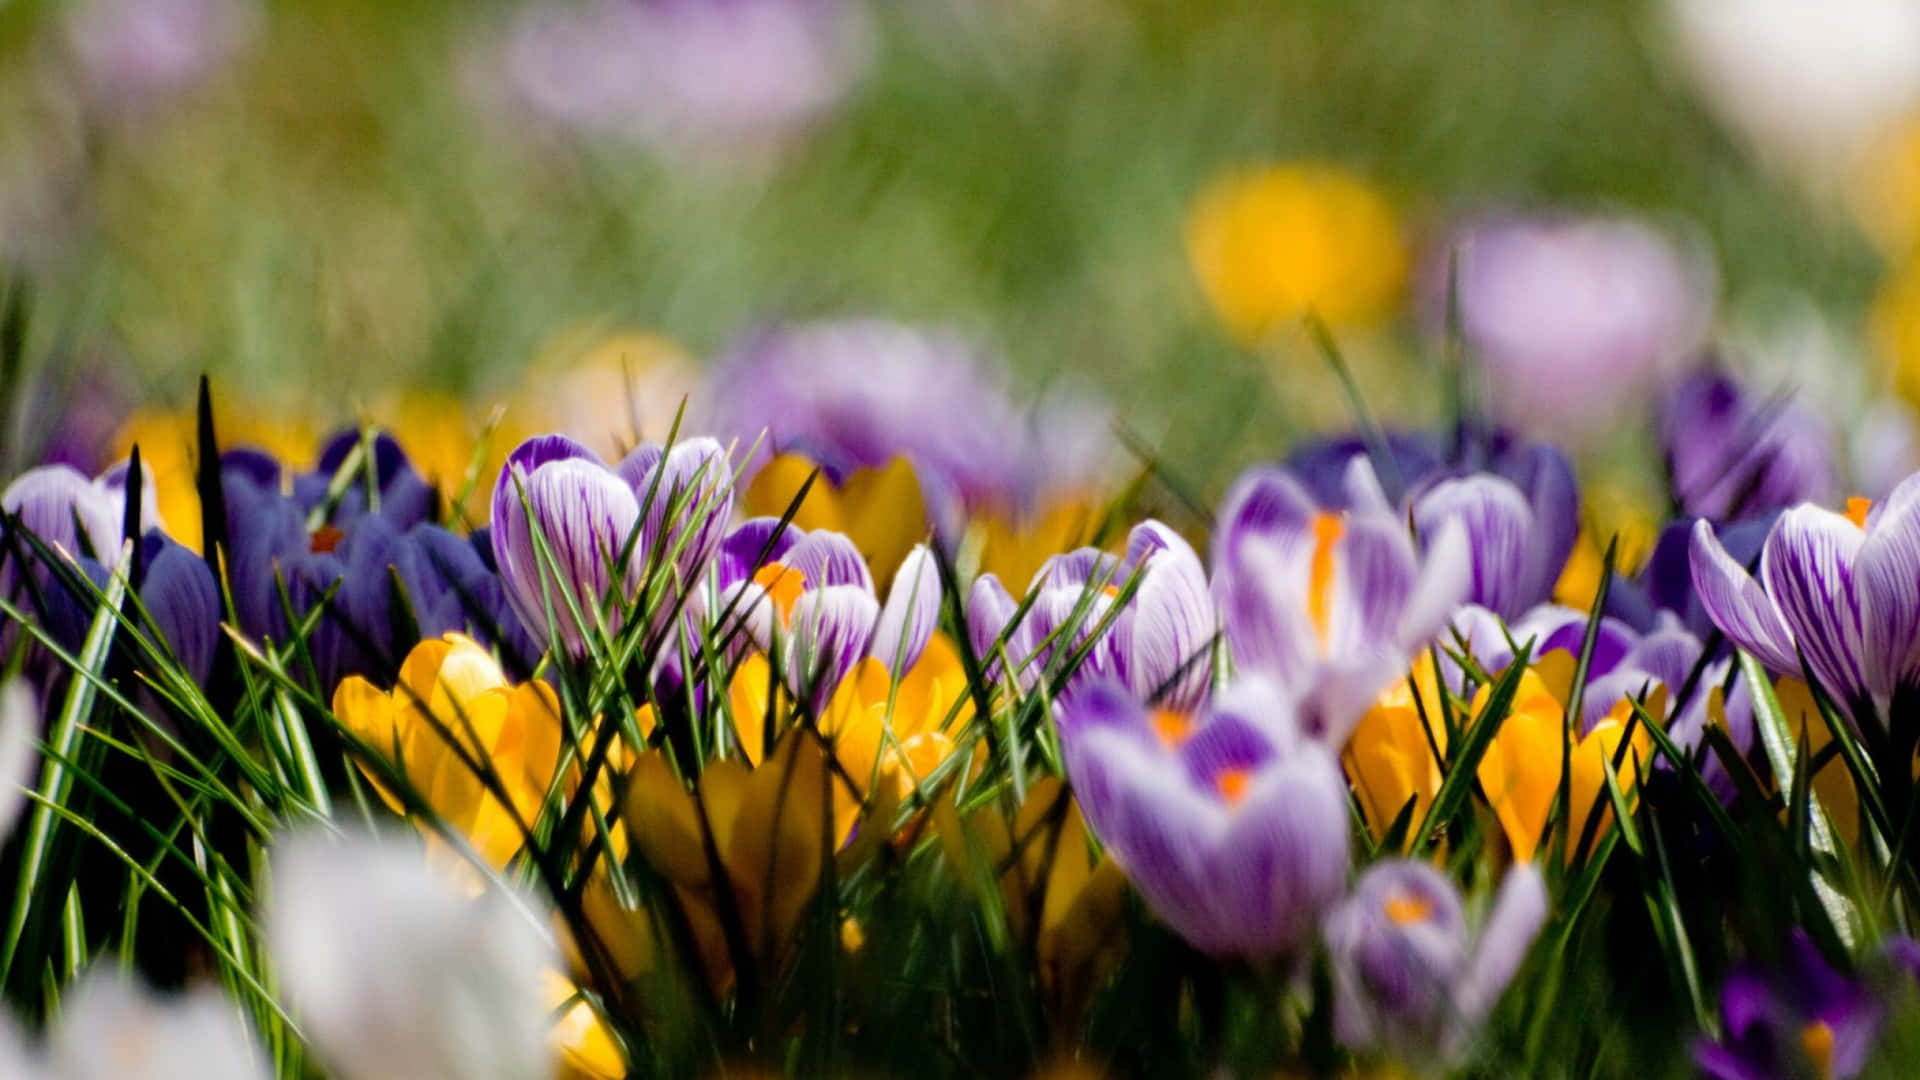 crocus flowers in the spring